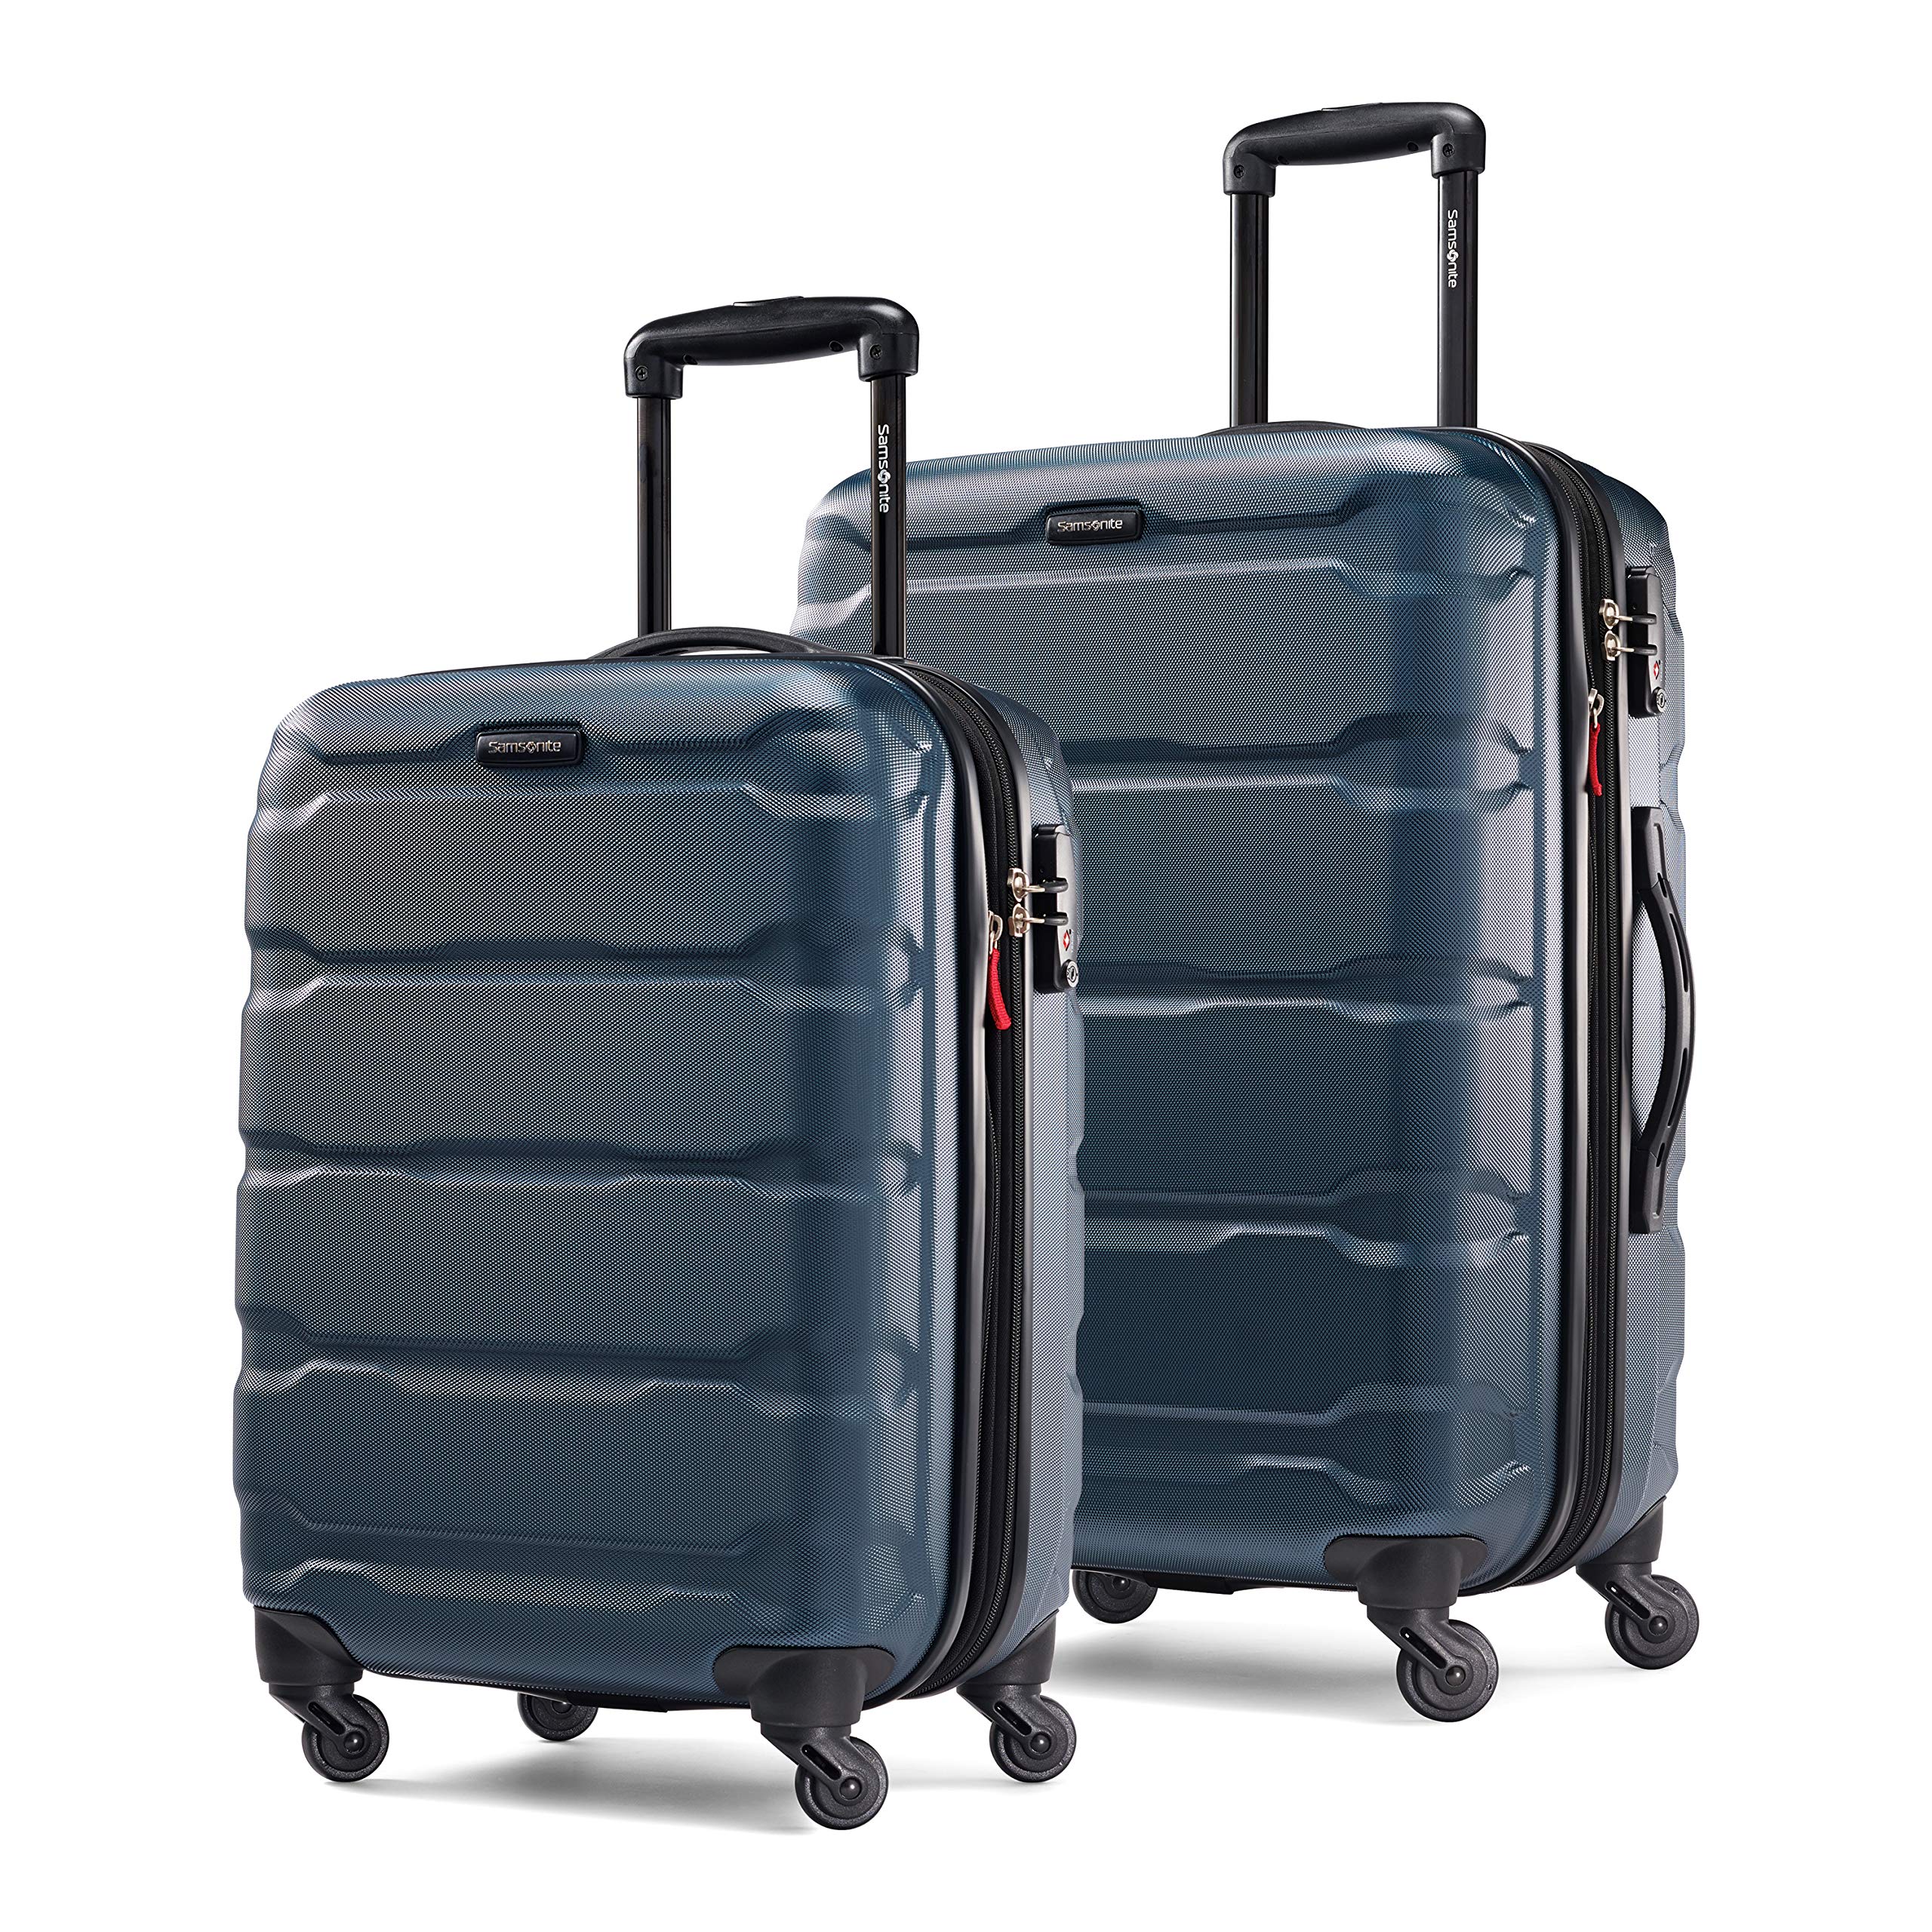 Samsonite Omni Hardside Piece Luggage Nested Spinner Set, 52% OFF